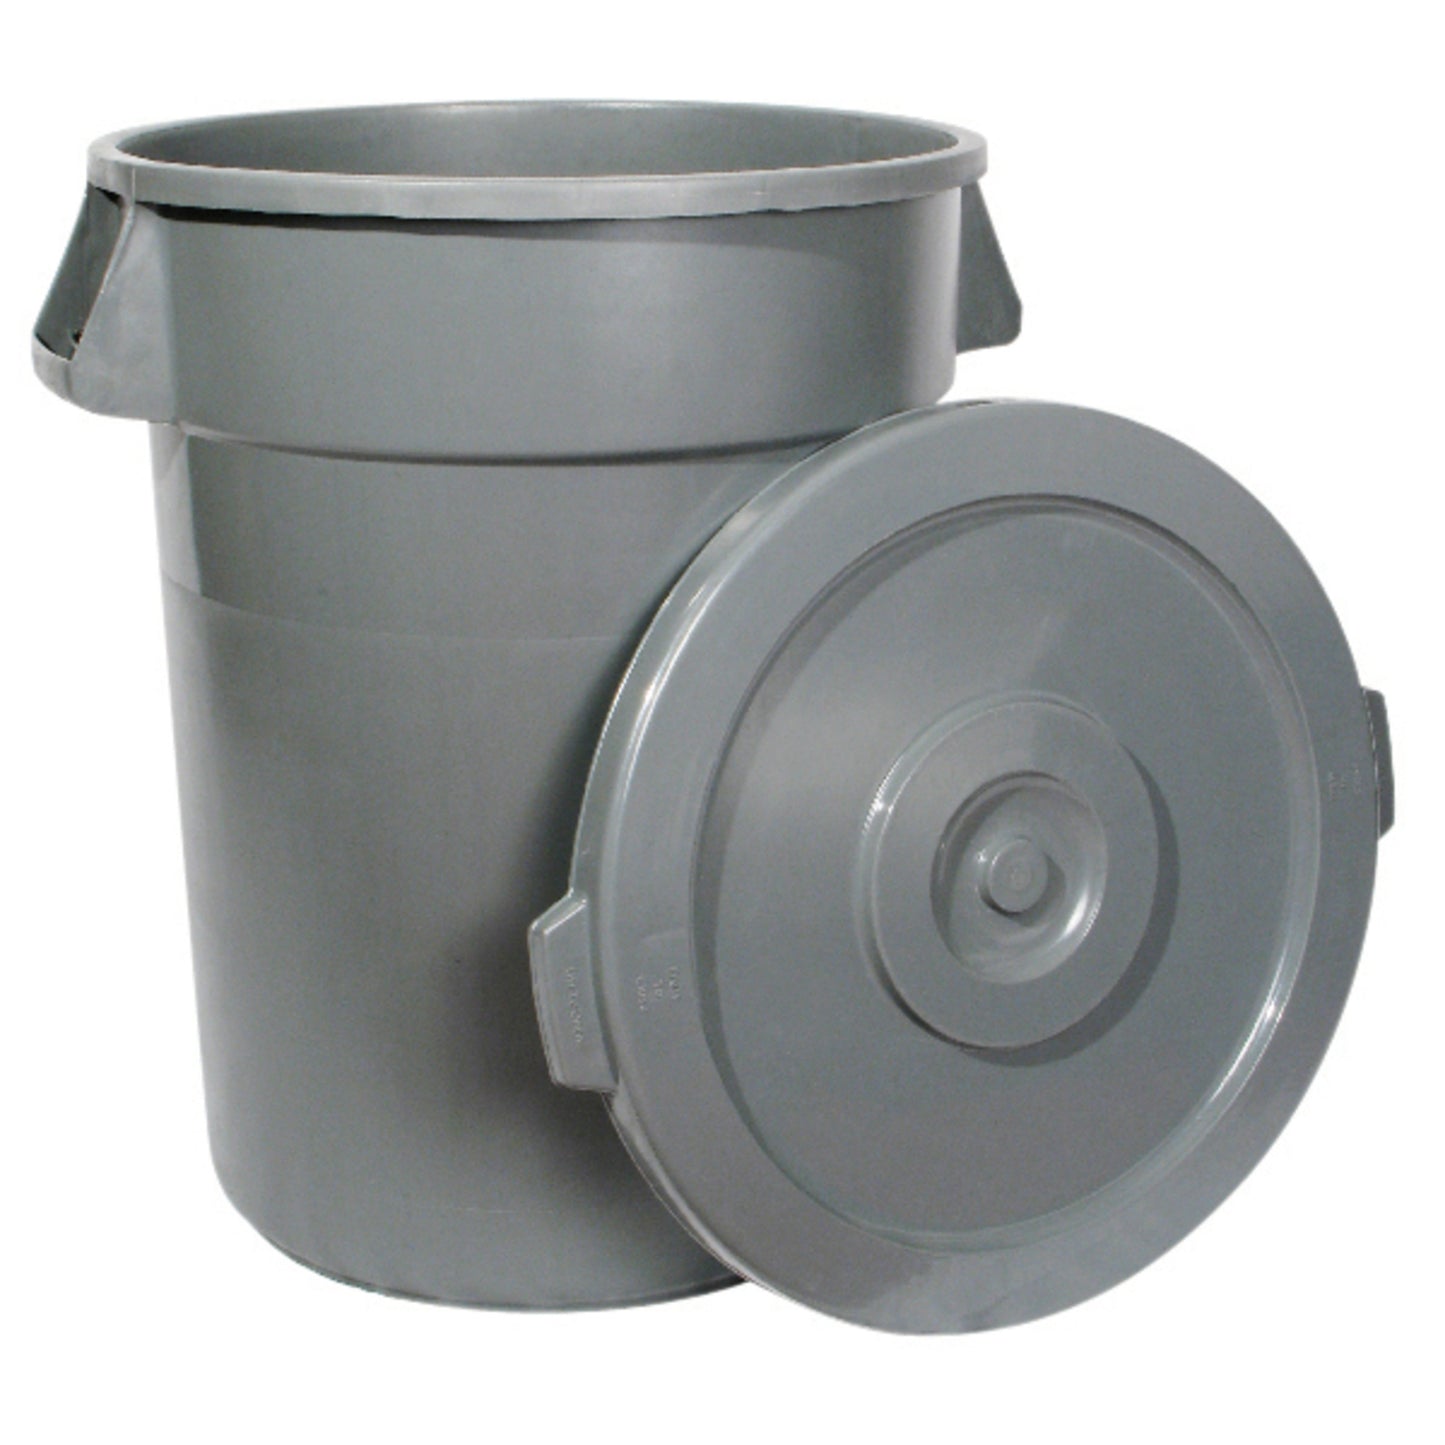 Heavy-Duty Round Trash Can - Gray, 44 Gallon